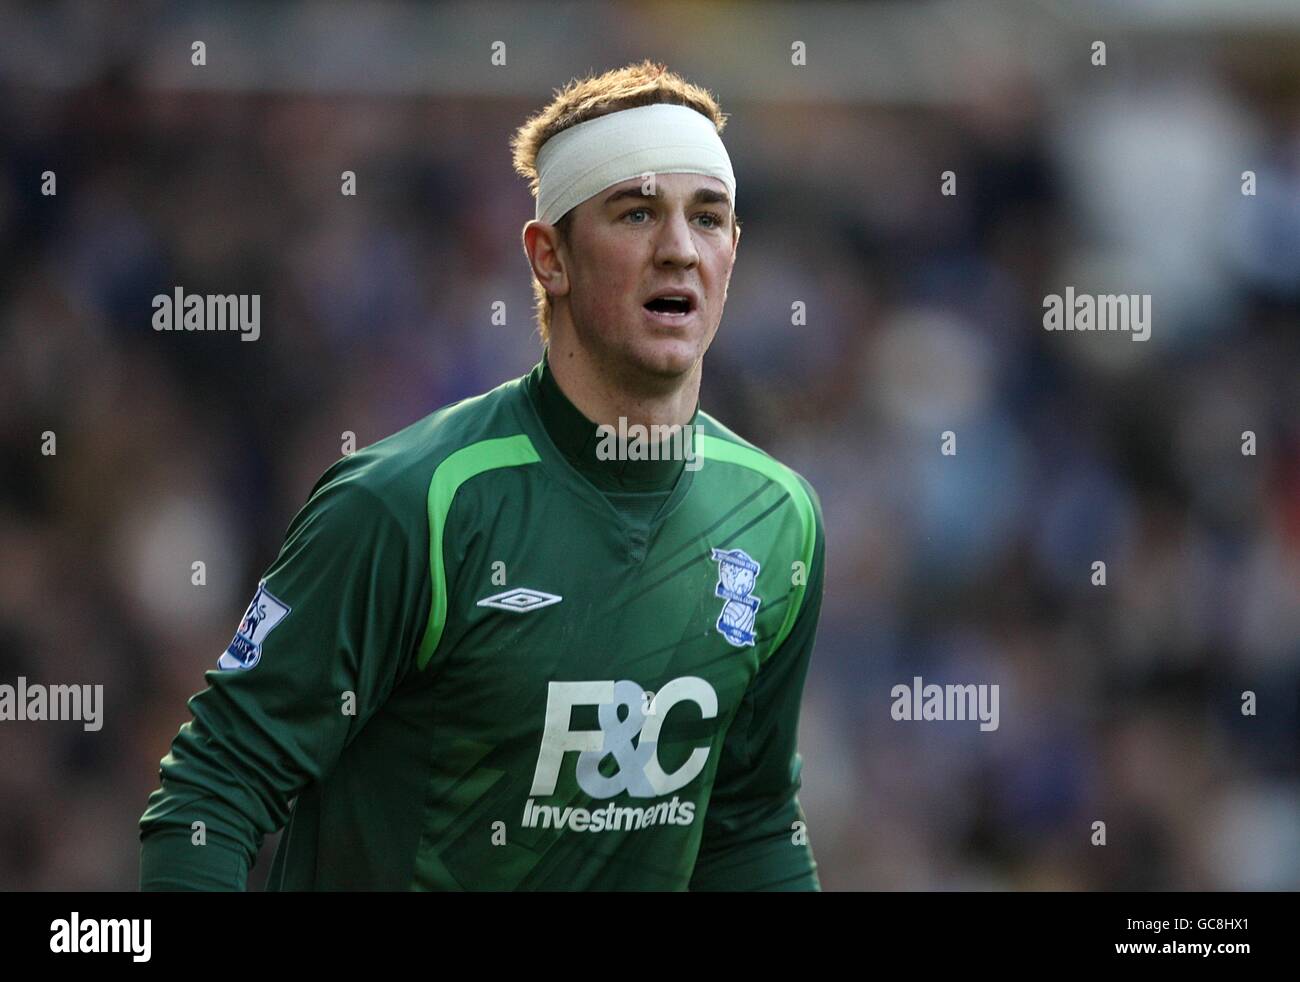 Soccer - Barclays Premier League - Birmingham City v Chelsea - St Andrews Stadium. Joe Hart, Birmingham City goalkeeper Stock Photo